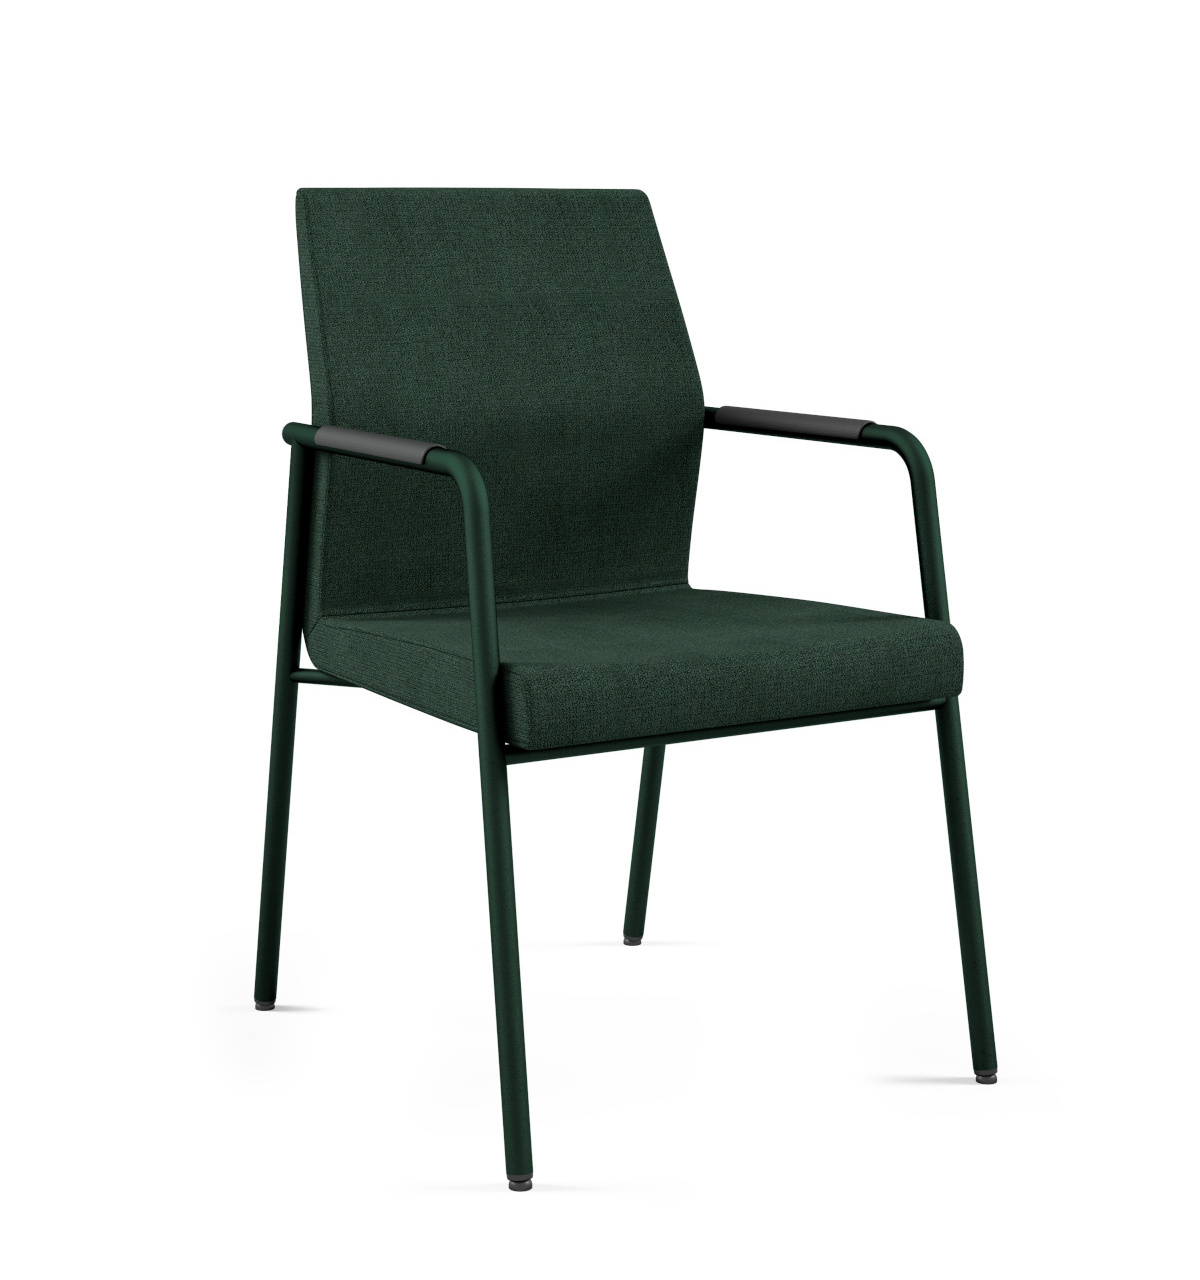 AcosPro 30H Sessel, 4-Fuß, Armlehnen, nicht stapelbar